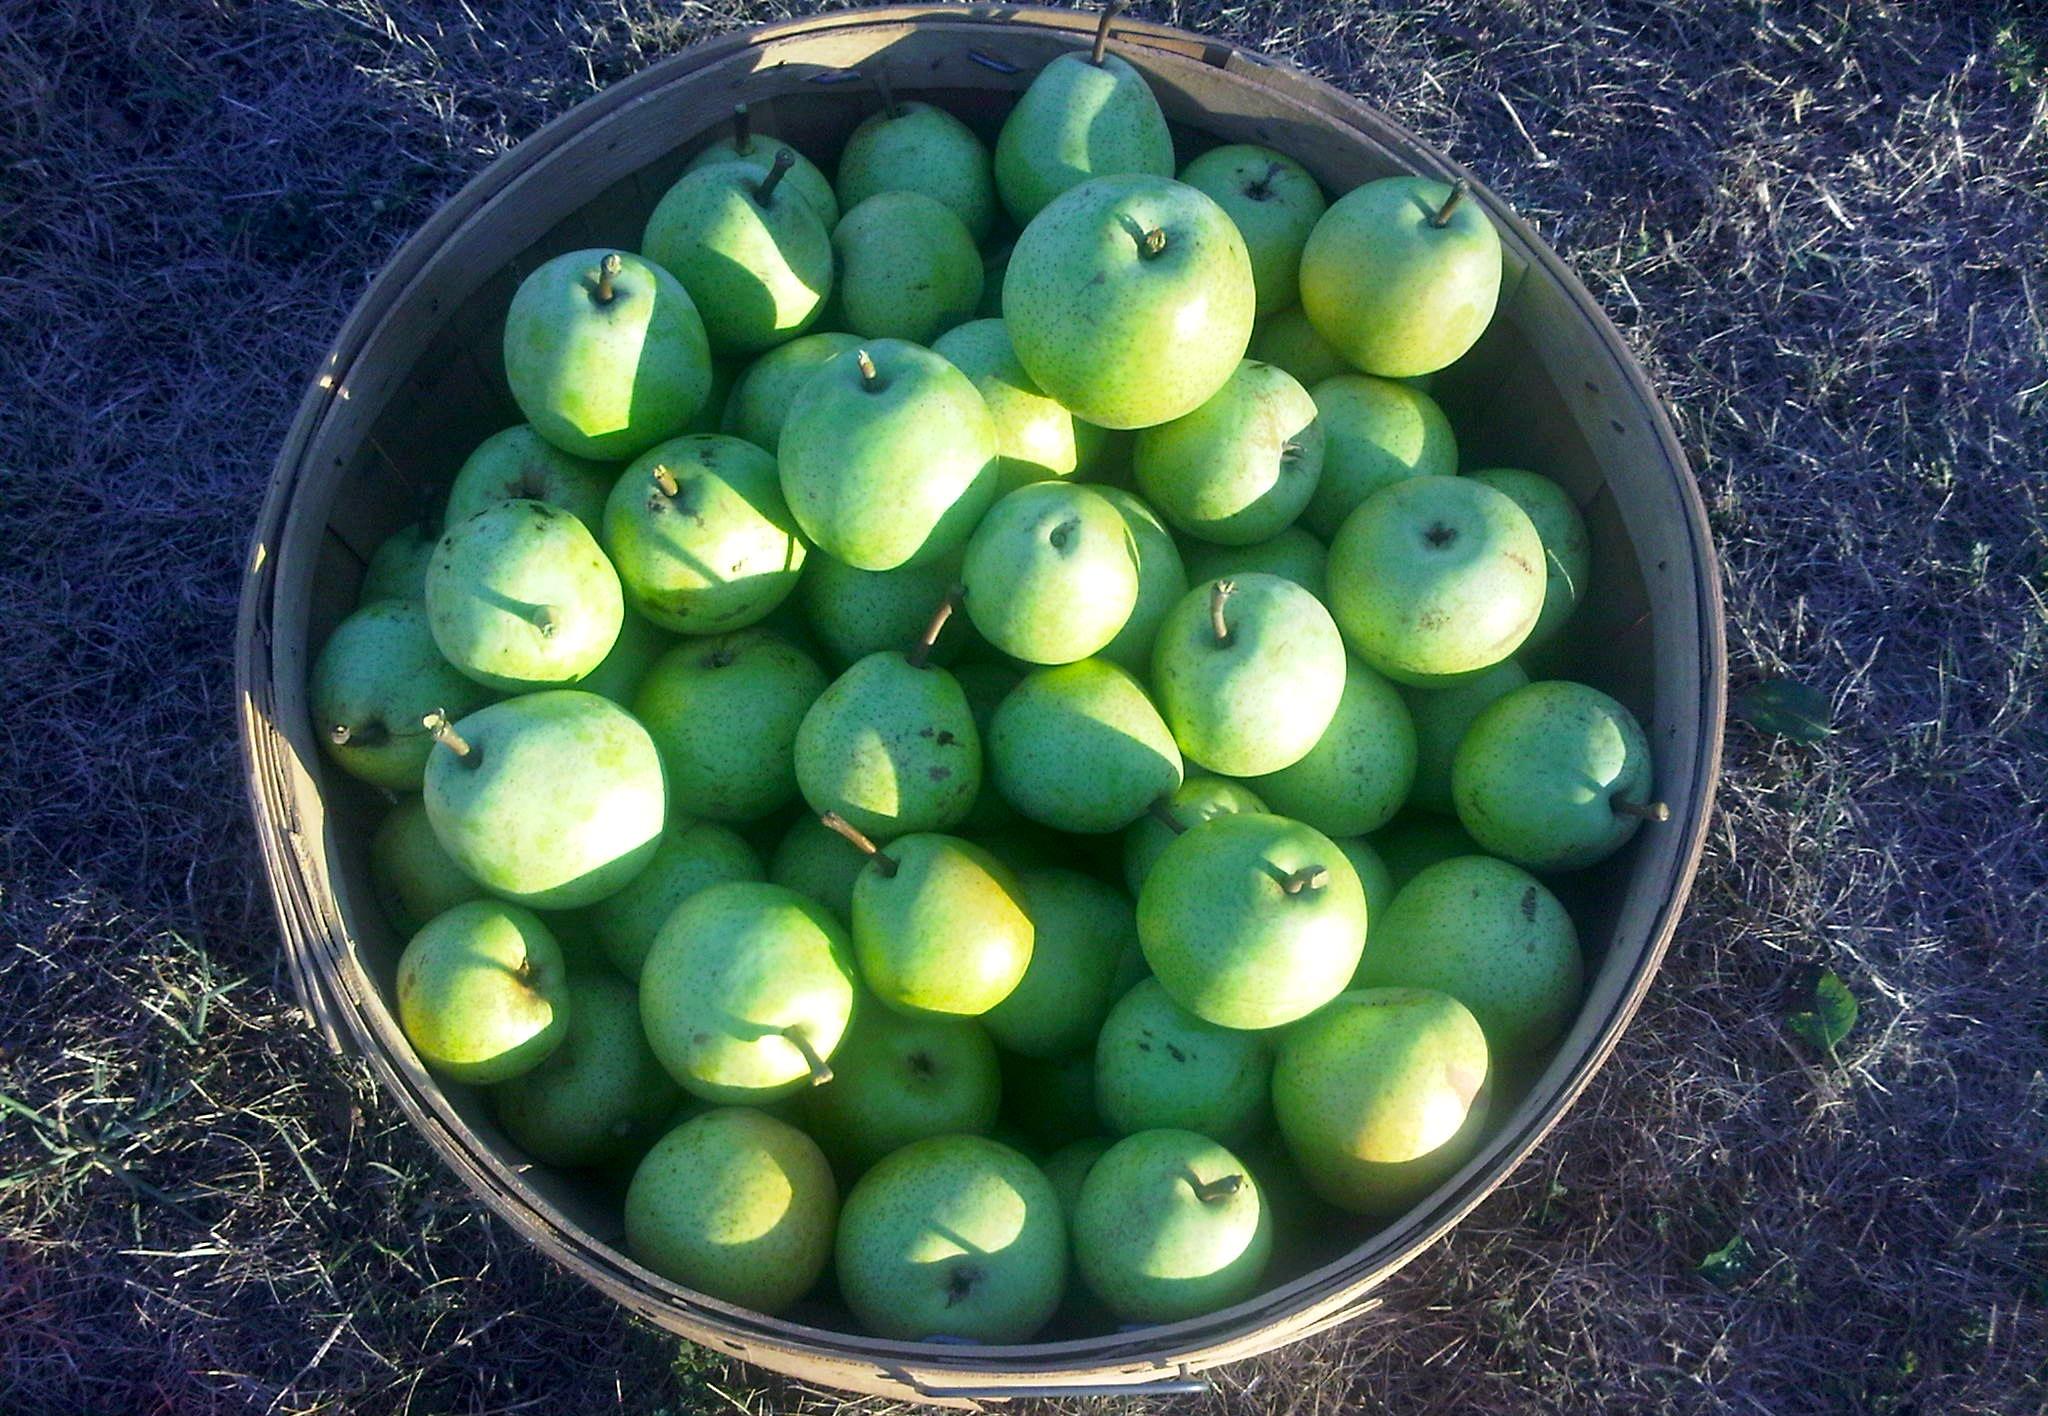 photo of a bushel of sugar pears